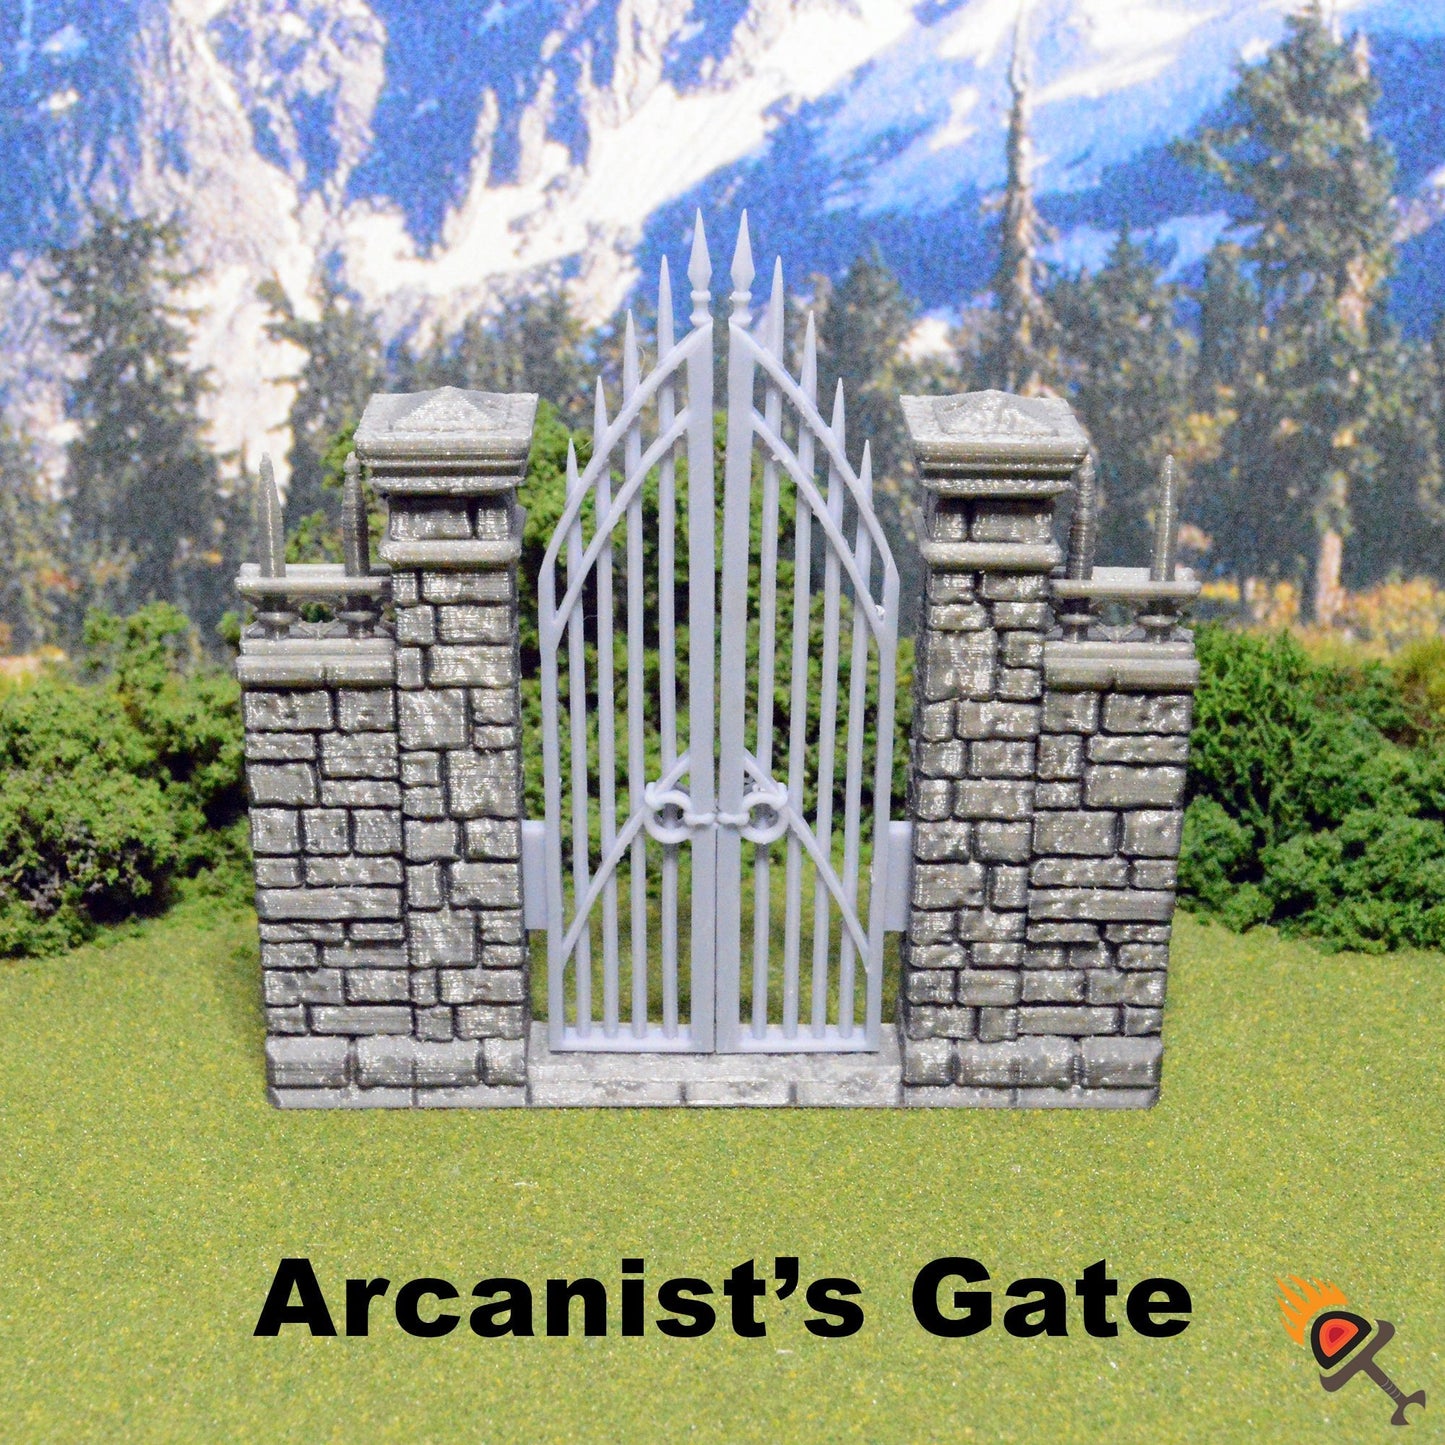 Arcanist's Gate and Door Tiles 28mm - Modular OpenLOCK Building Tiles, D&D Terrain - DnD Stone Wall Tiles